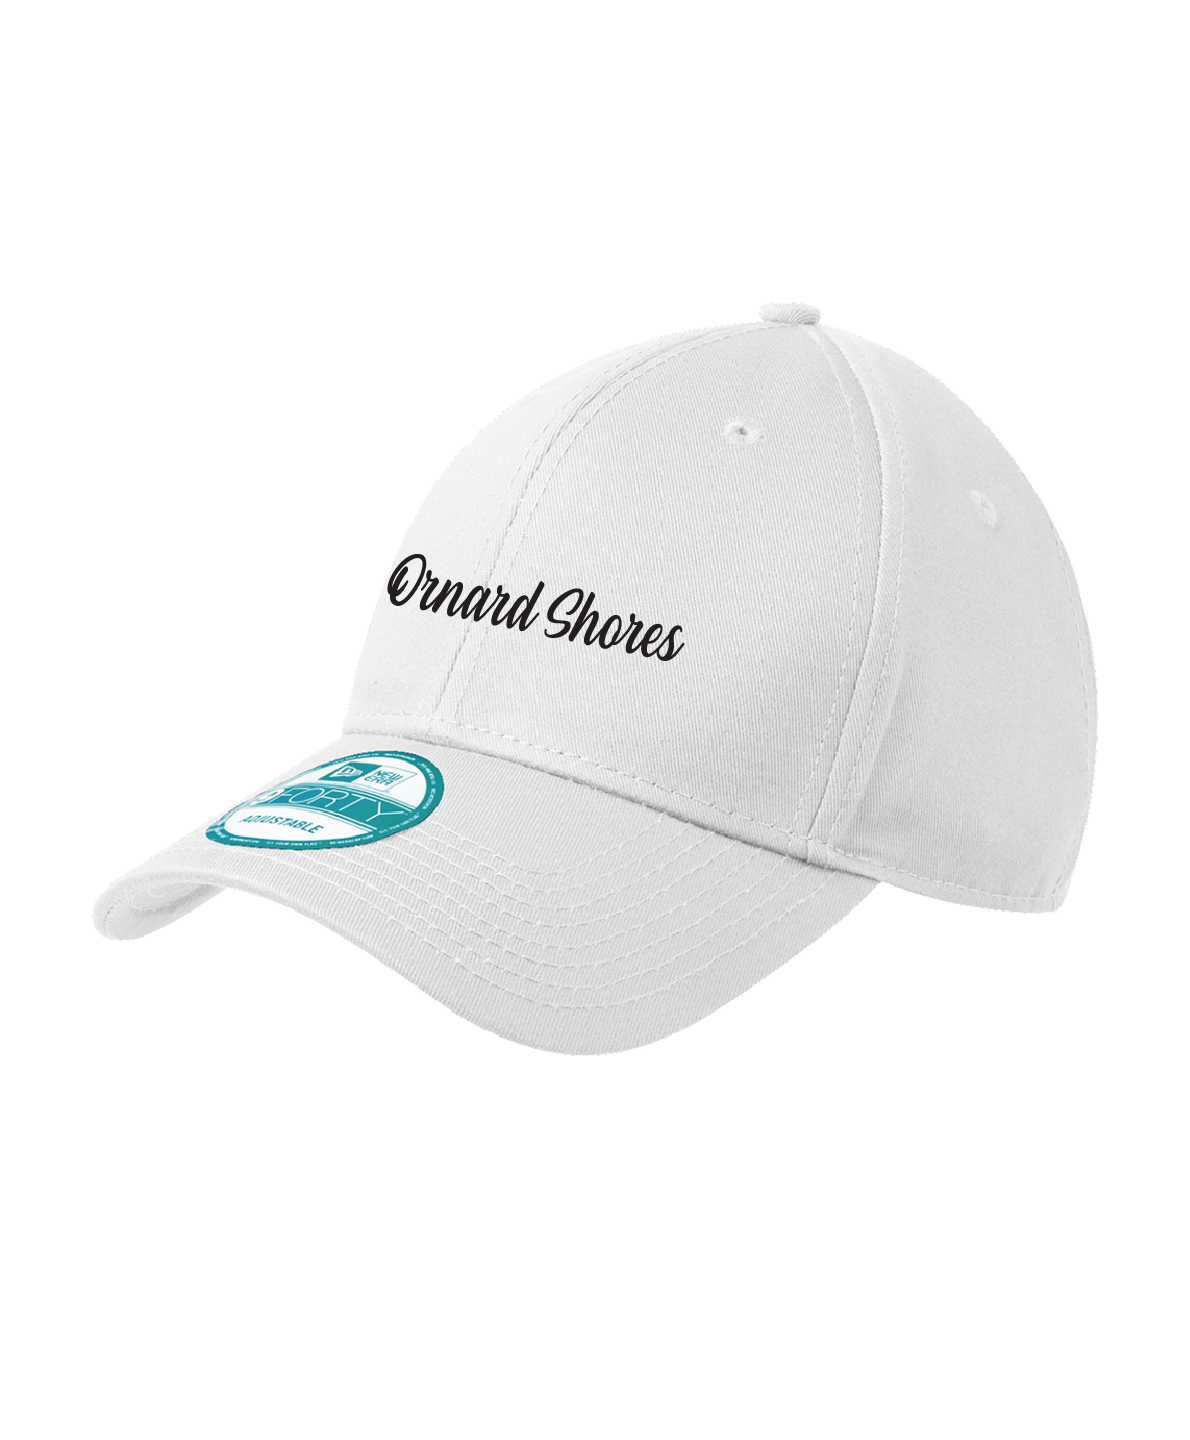 Oxnard Shores - New Era® - Adjustable Structured Cap